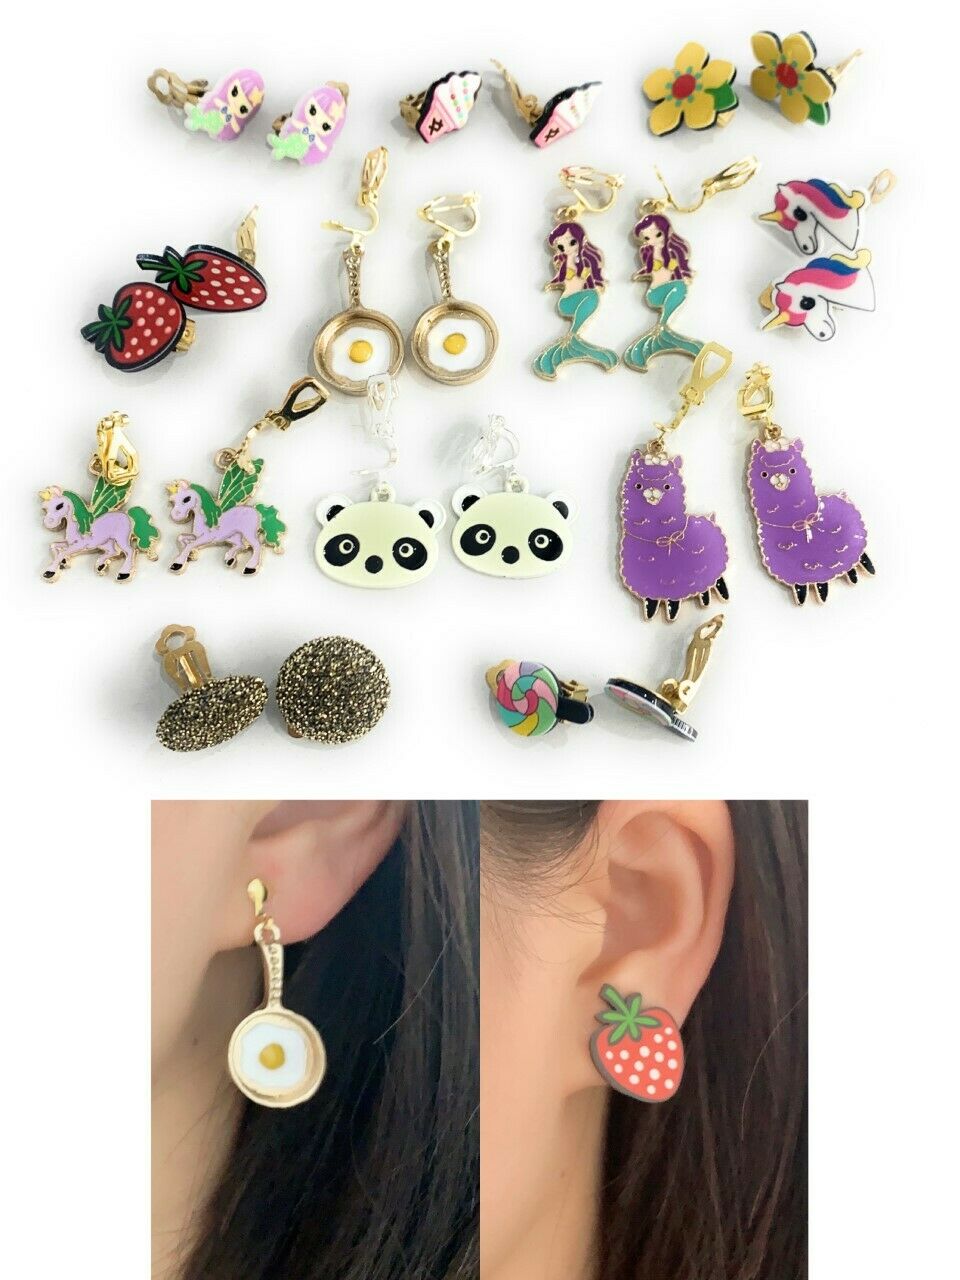 Girls CLIP ON Earrings Studs Non Pierced Ears Ear Stud Xmas Gift Stocking Filler